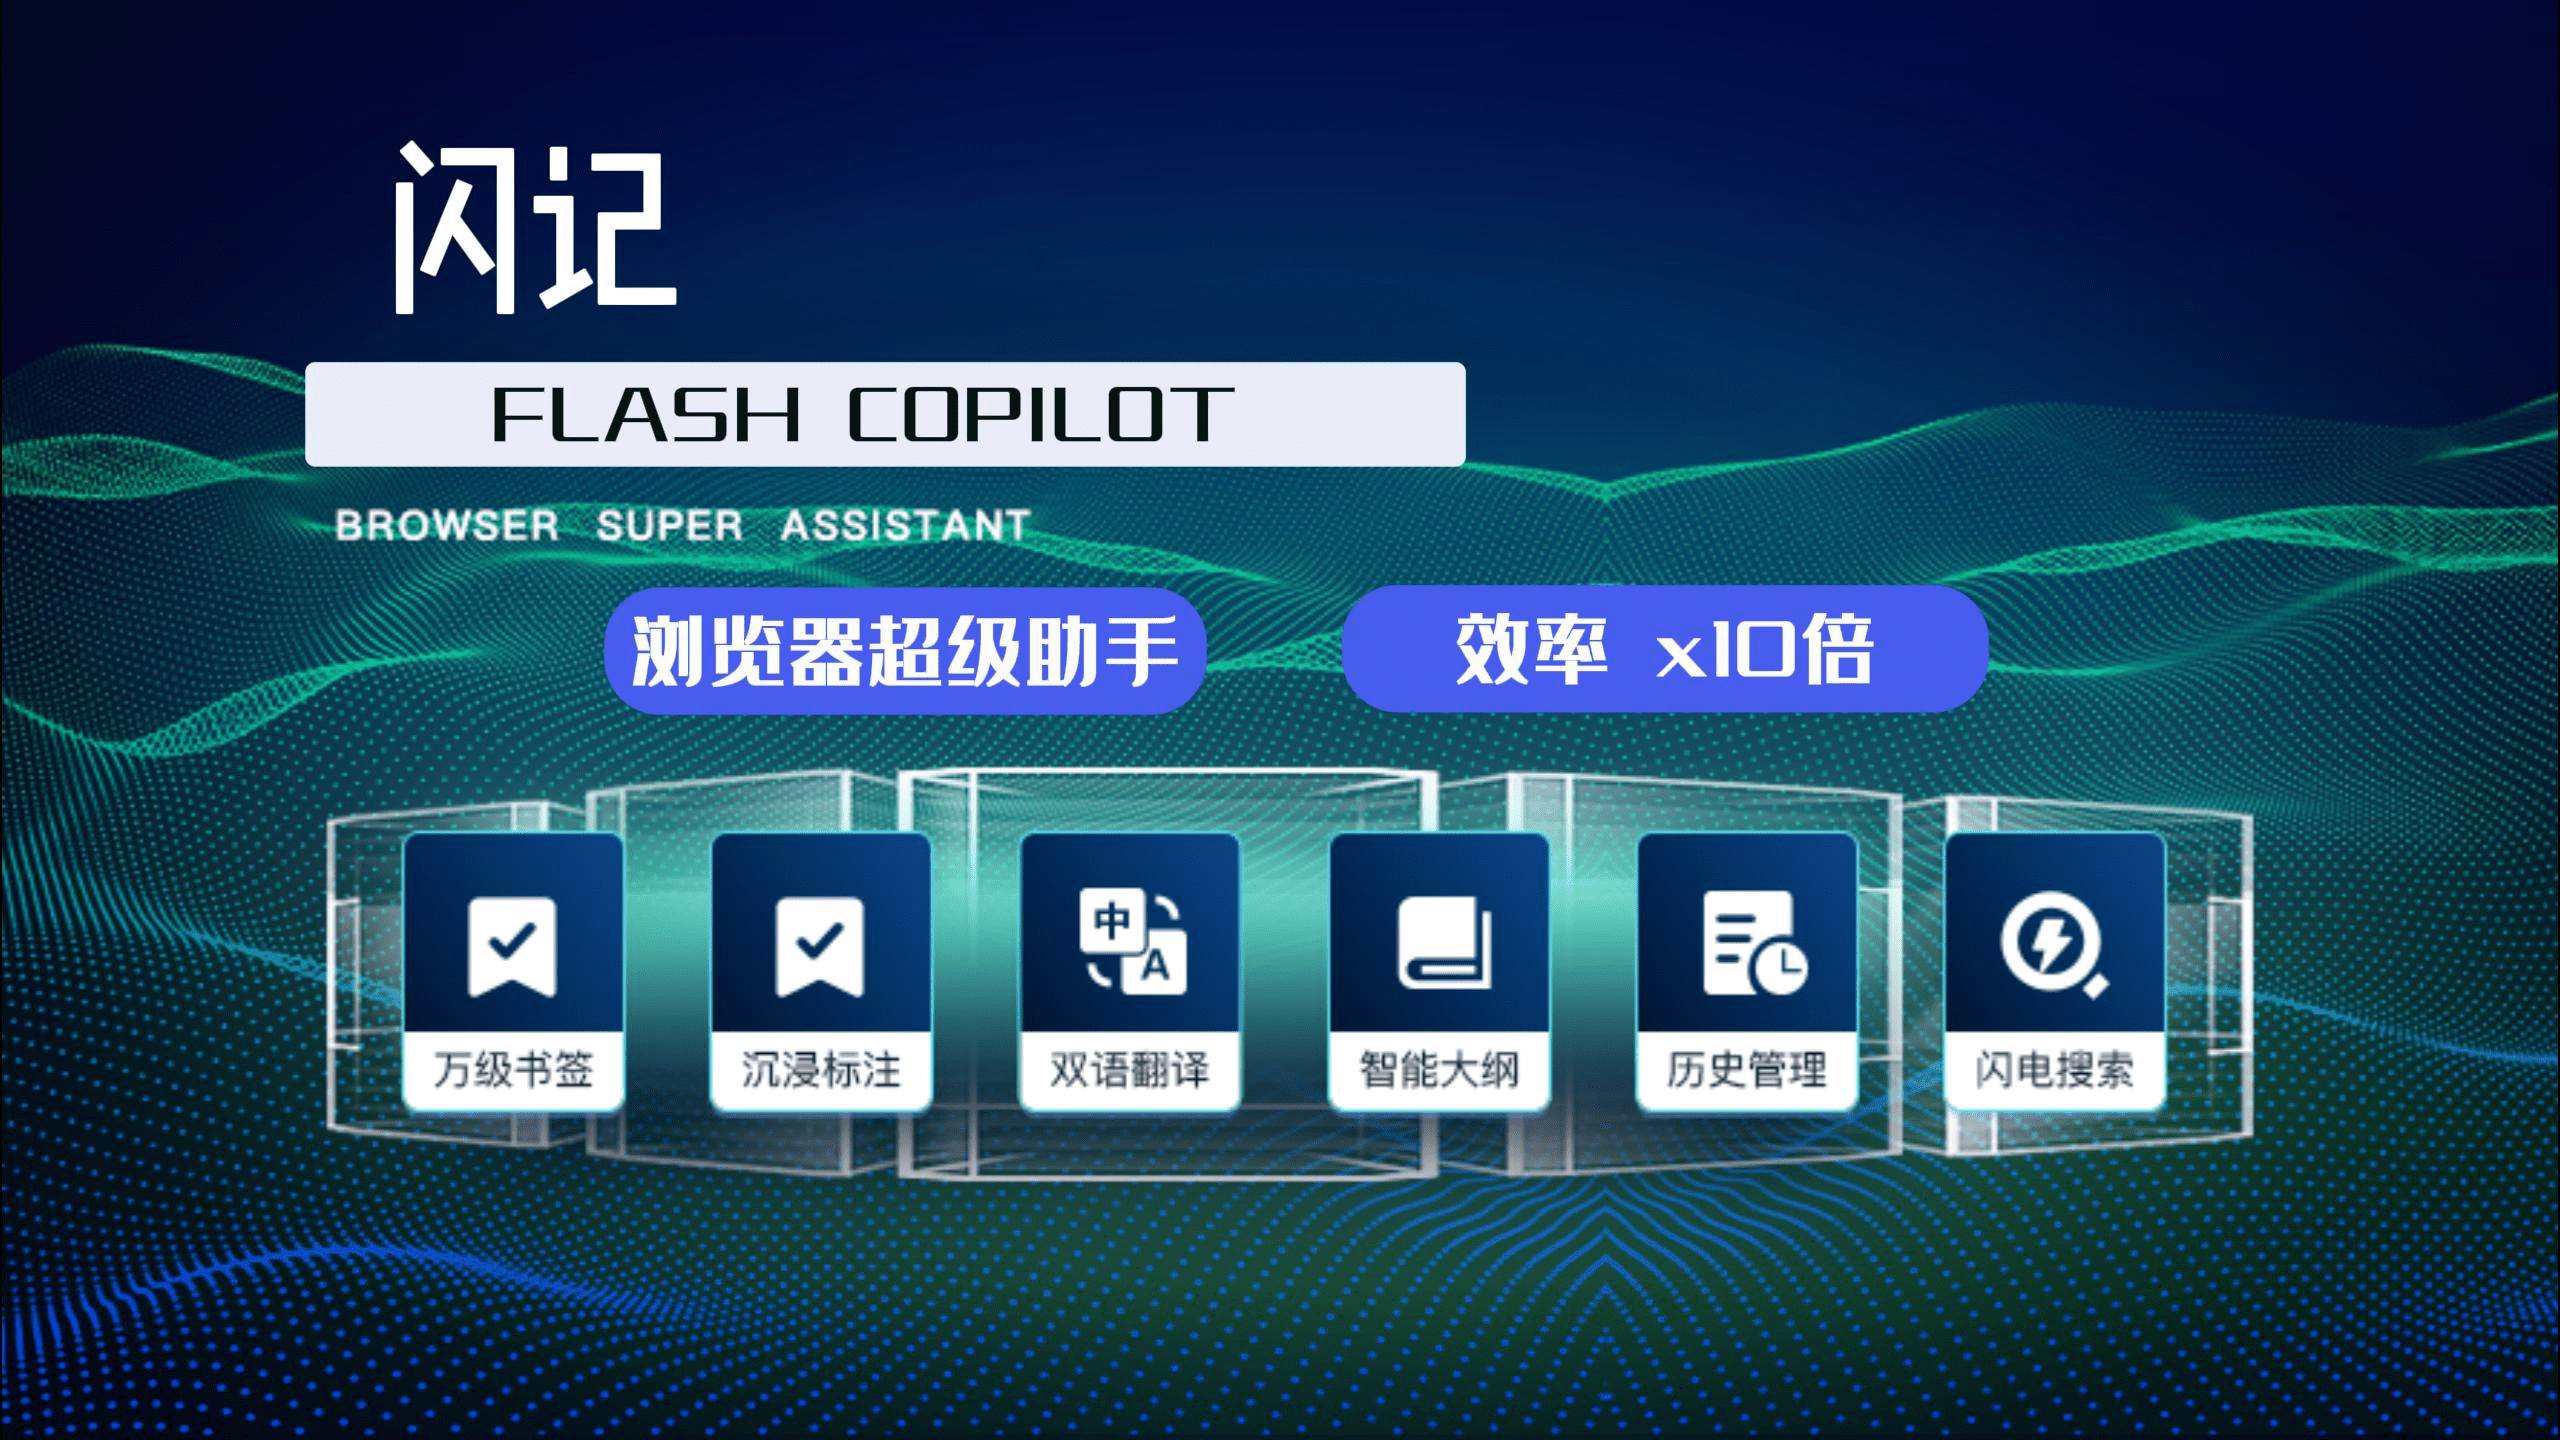 Flash Copilot 闪记 —— 浏览器超级助手，效率 x10 倍，IT 人必备神器